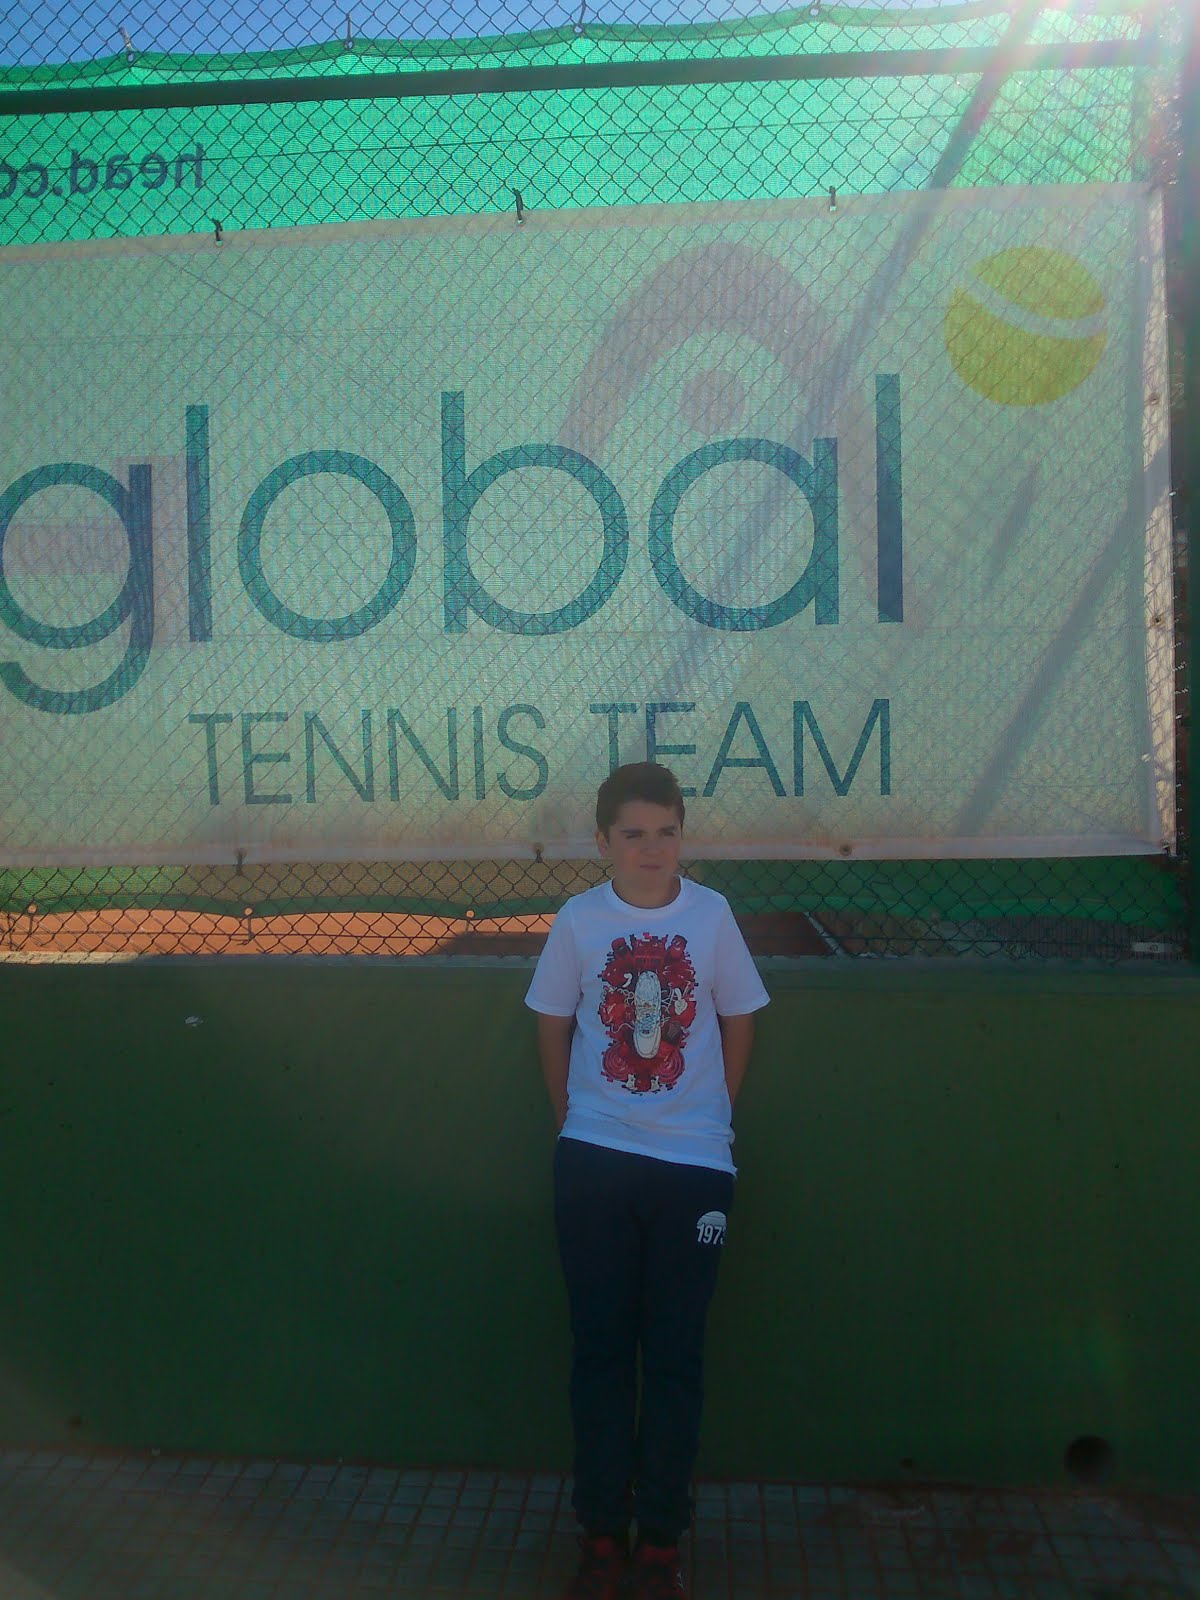 Global tennis team